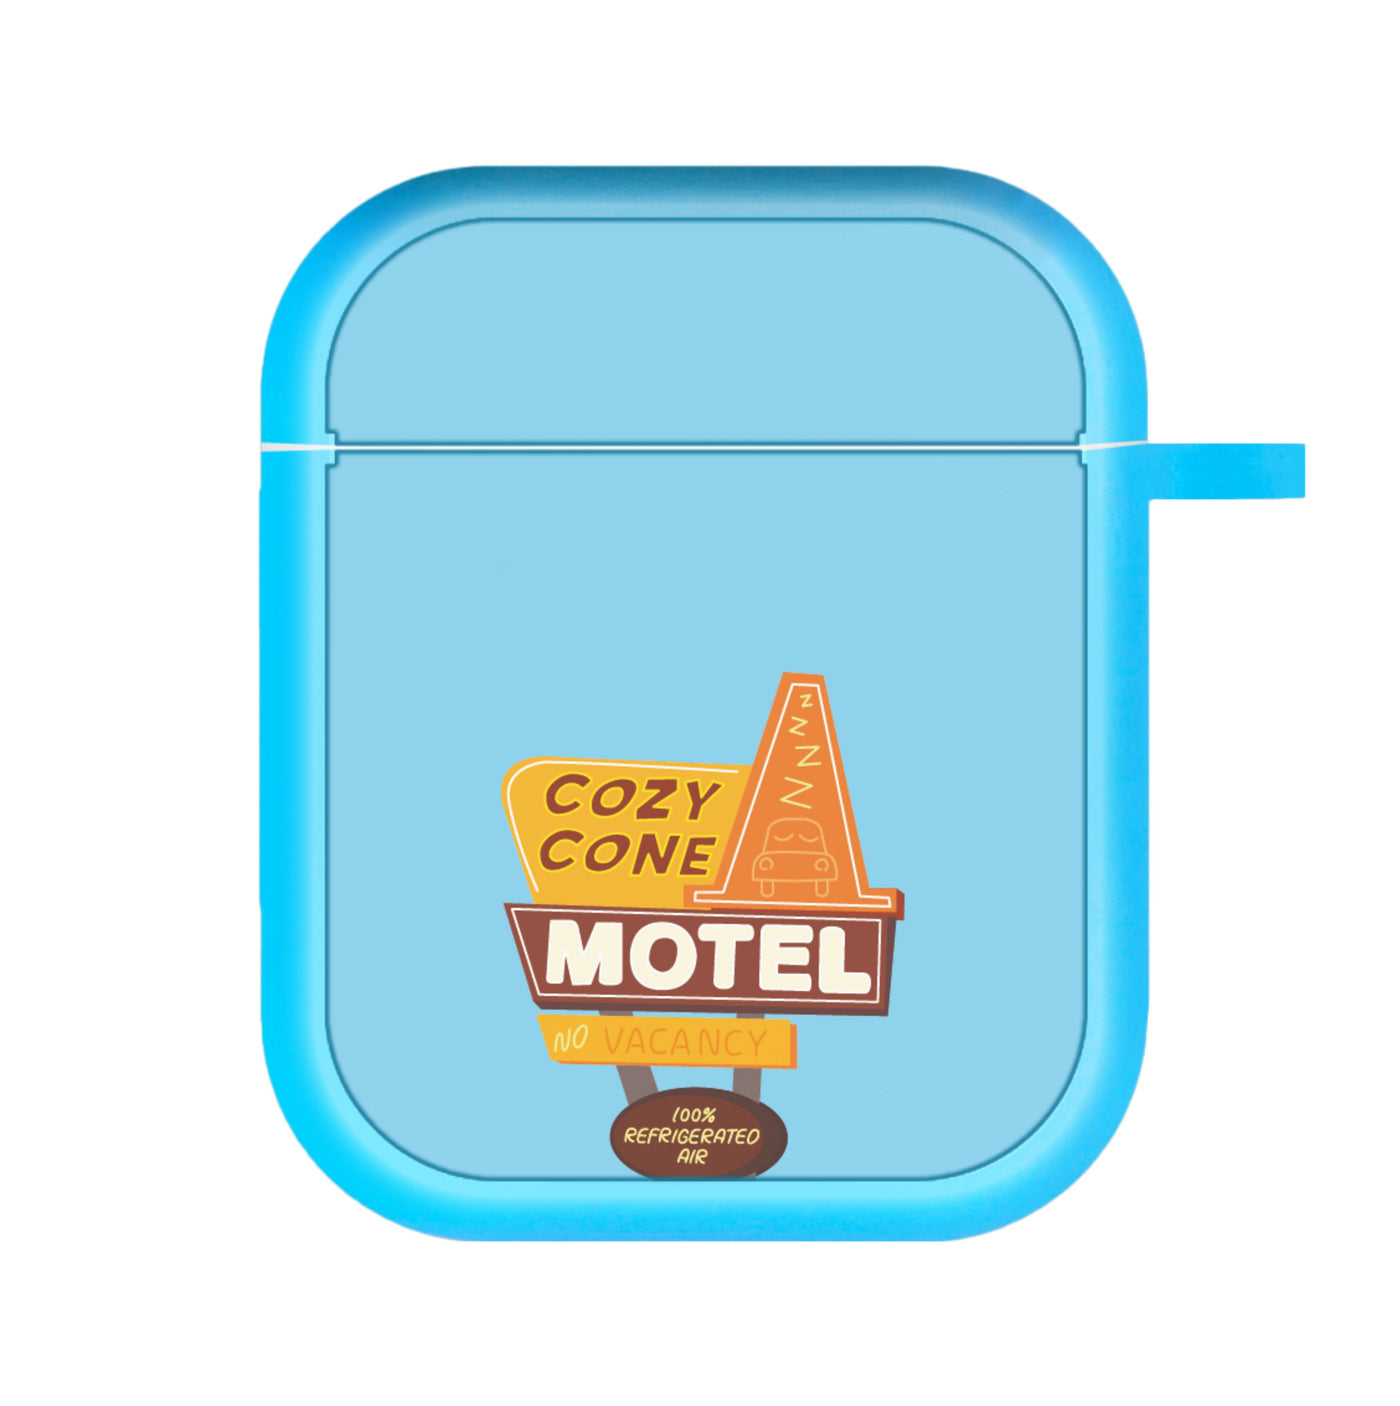 Cozy Cone Motel - Cars AirPods Case